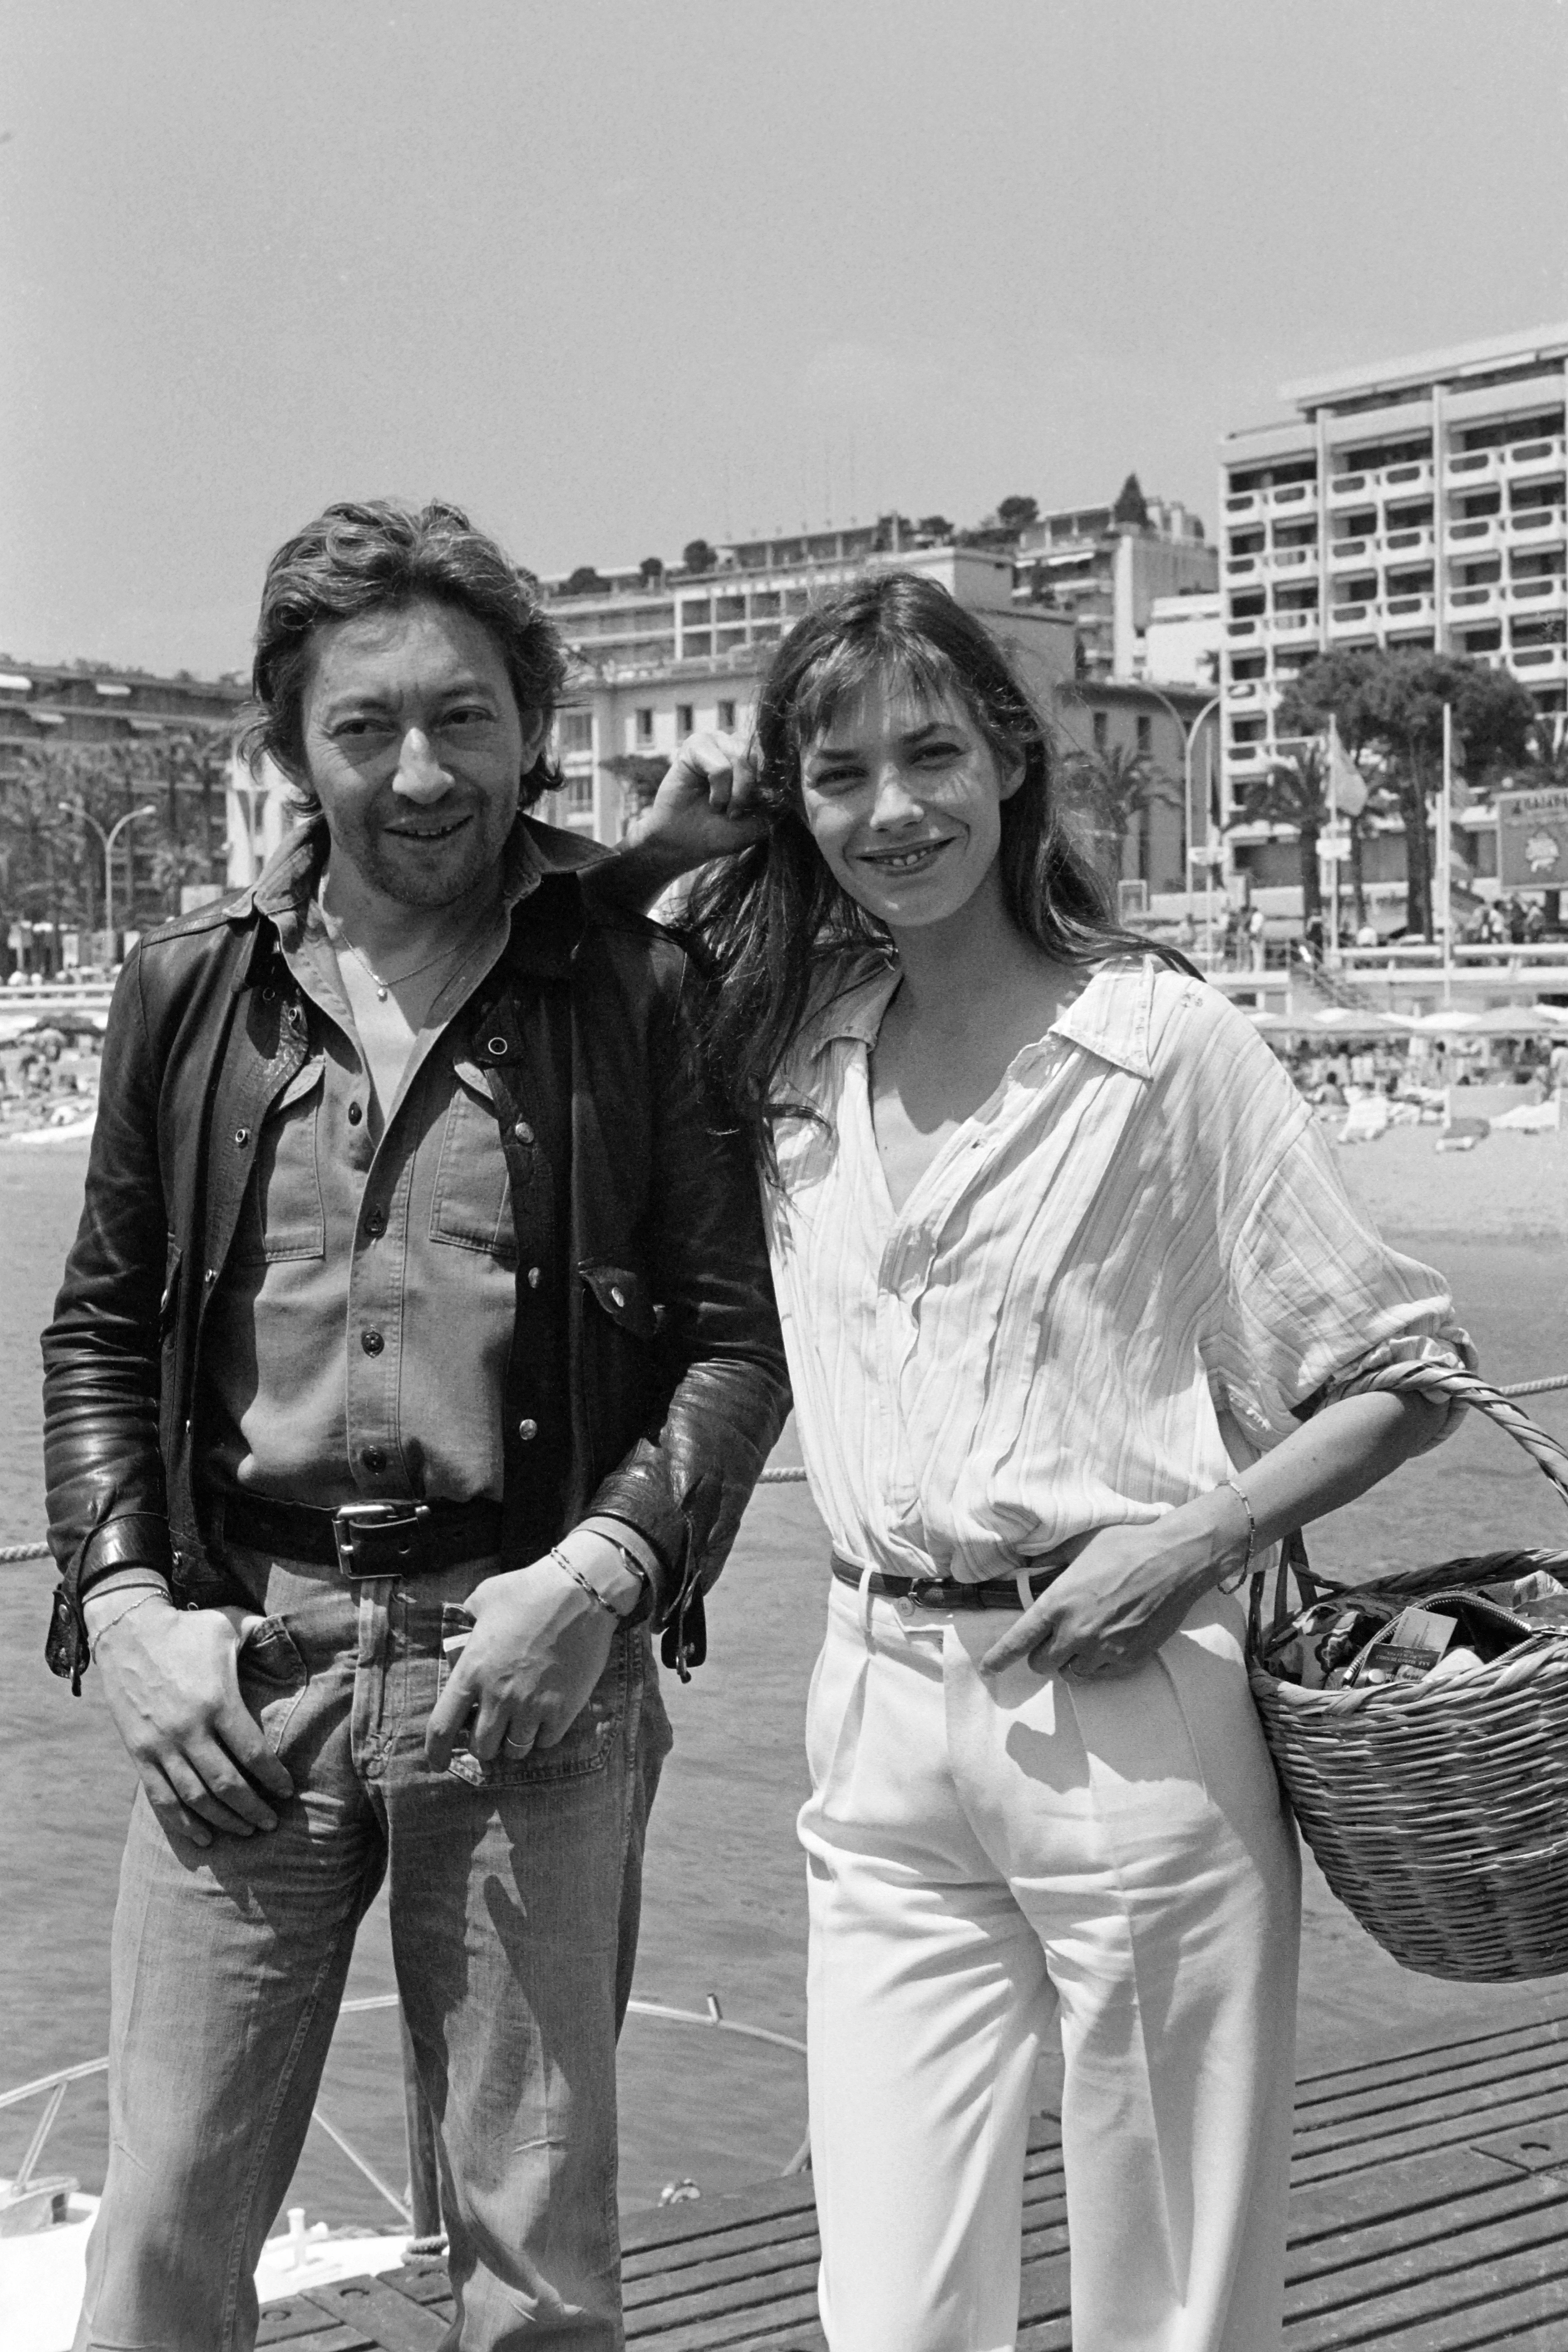 Jane Birkin Attends Cannes In The Most Jane Birkin Way